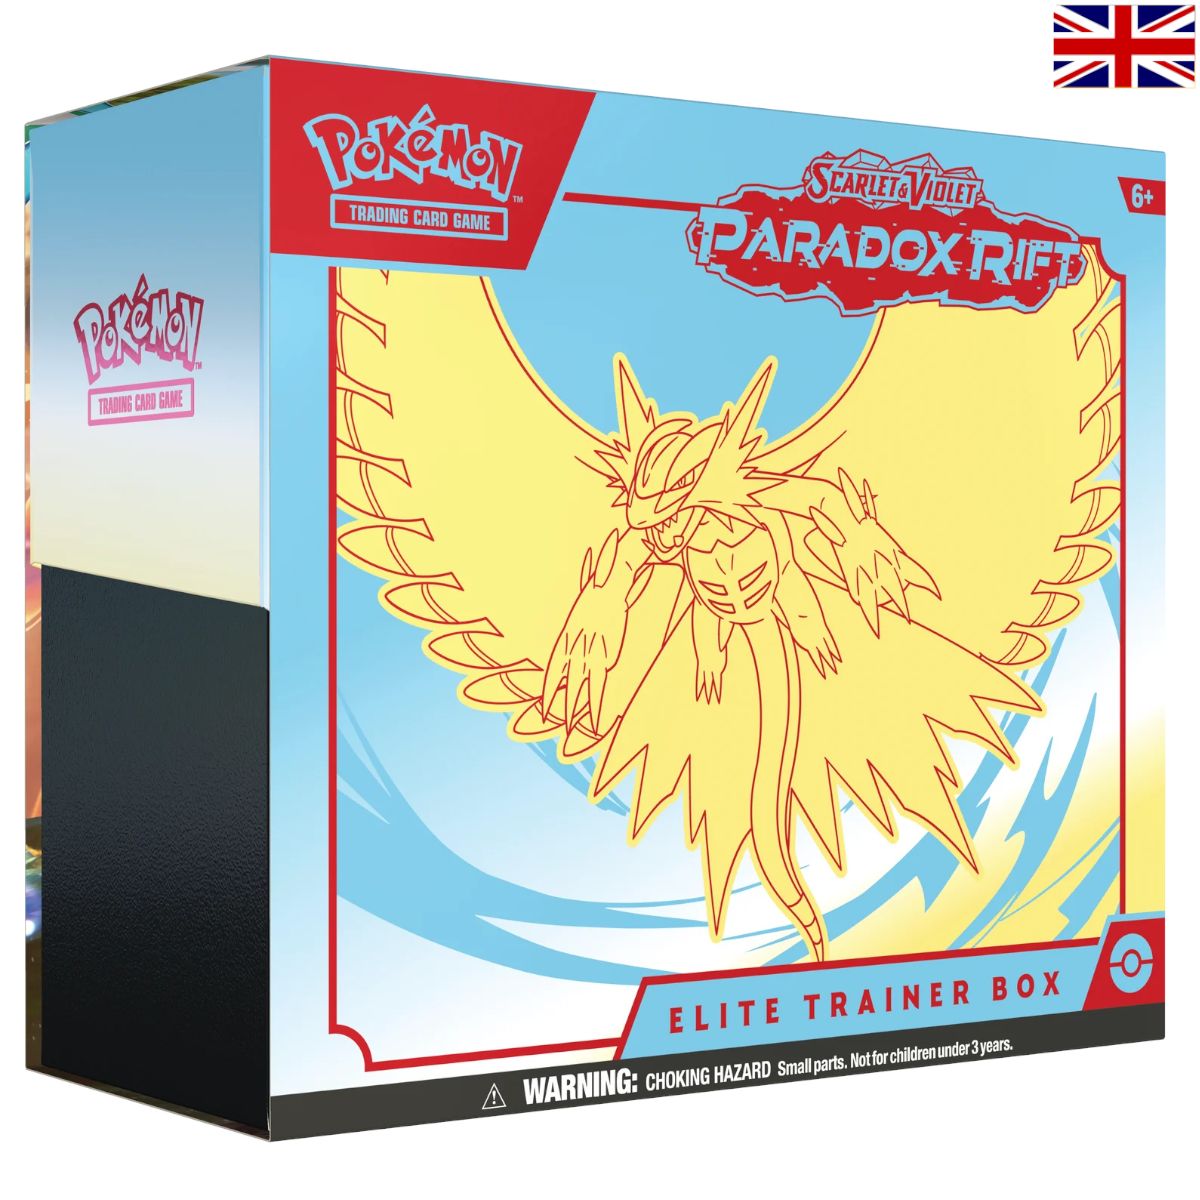 Pokémon - Paradox Rift Elite Trainer Box